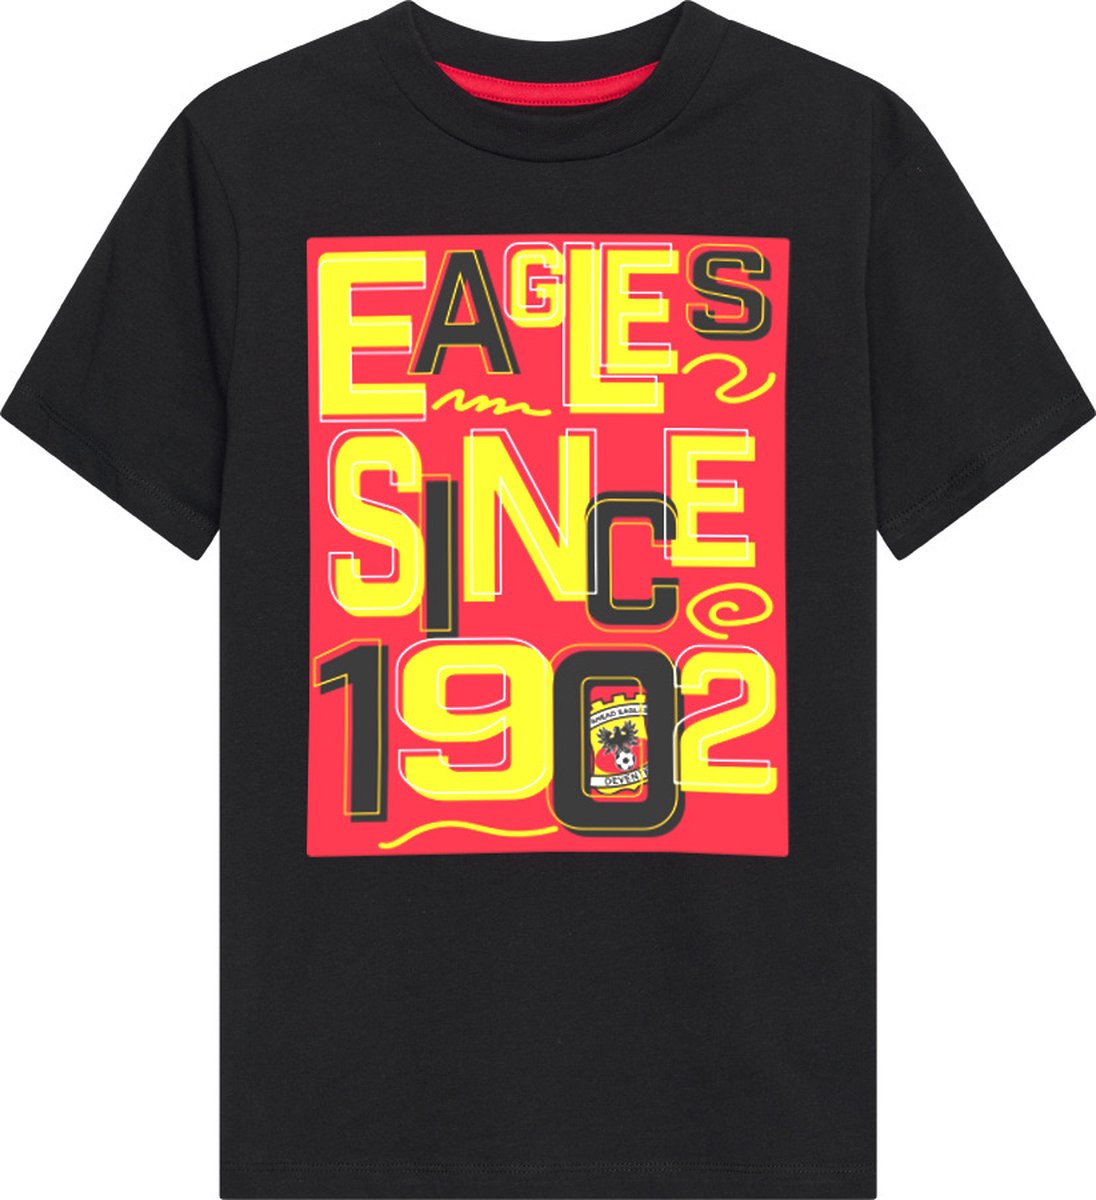 Eagles kids T-shirt - Voetbalshirts kinderen - Go Ahead Eagles - maat 92